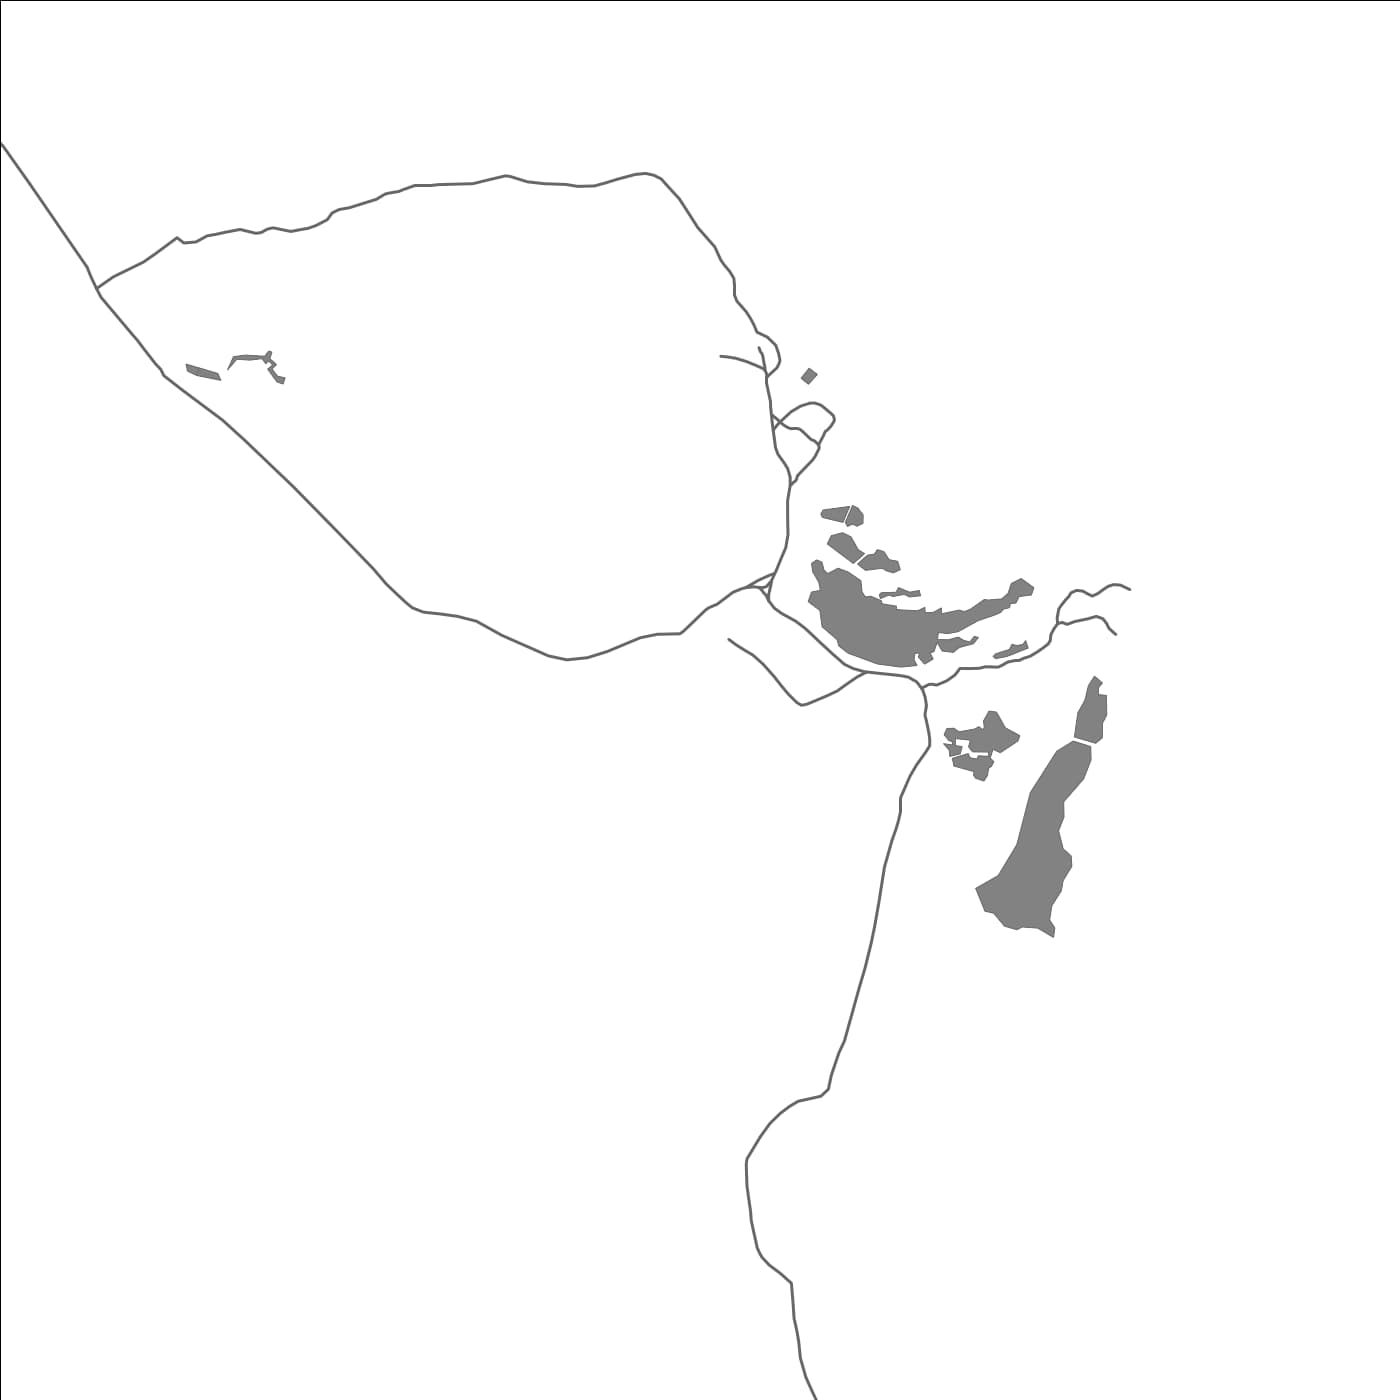 ROAD MAP OF NIKUTORU, KIRIBATI BY MAPBAKES